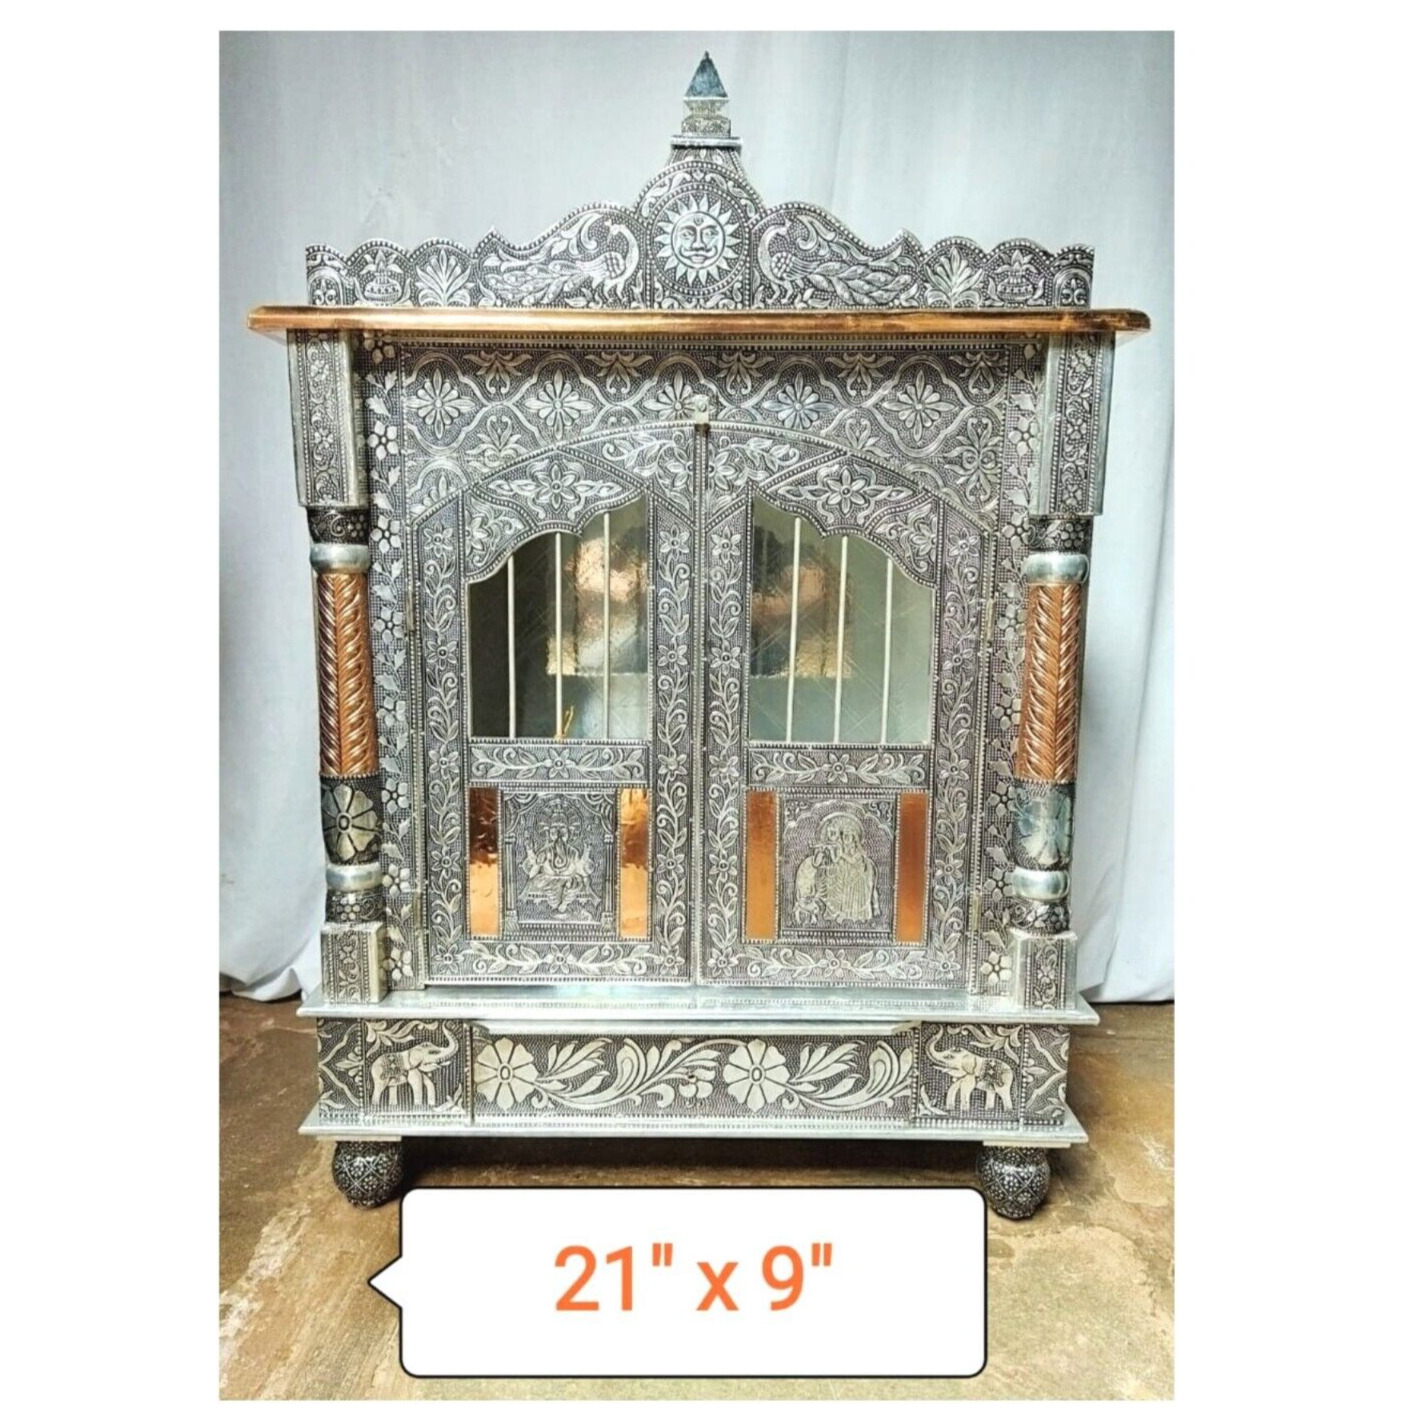 Oxidized Plated Temple Mandir Wooden Temple for Home Handmade Puja Ghar Altar